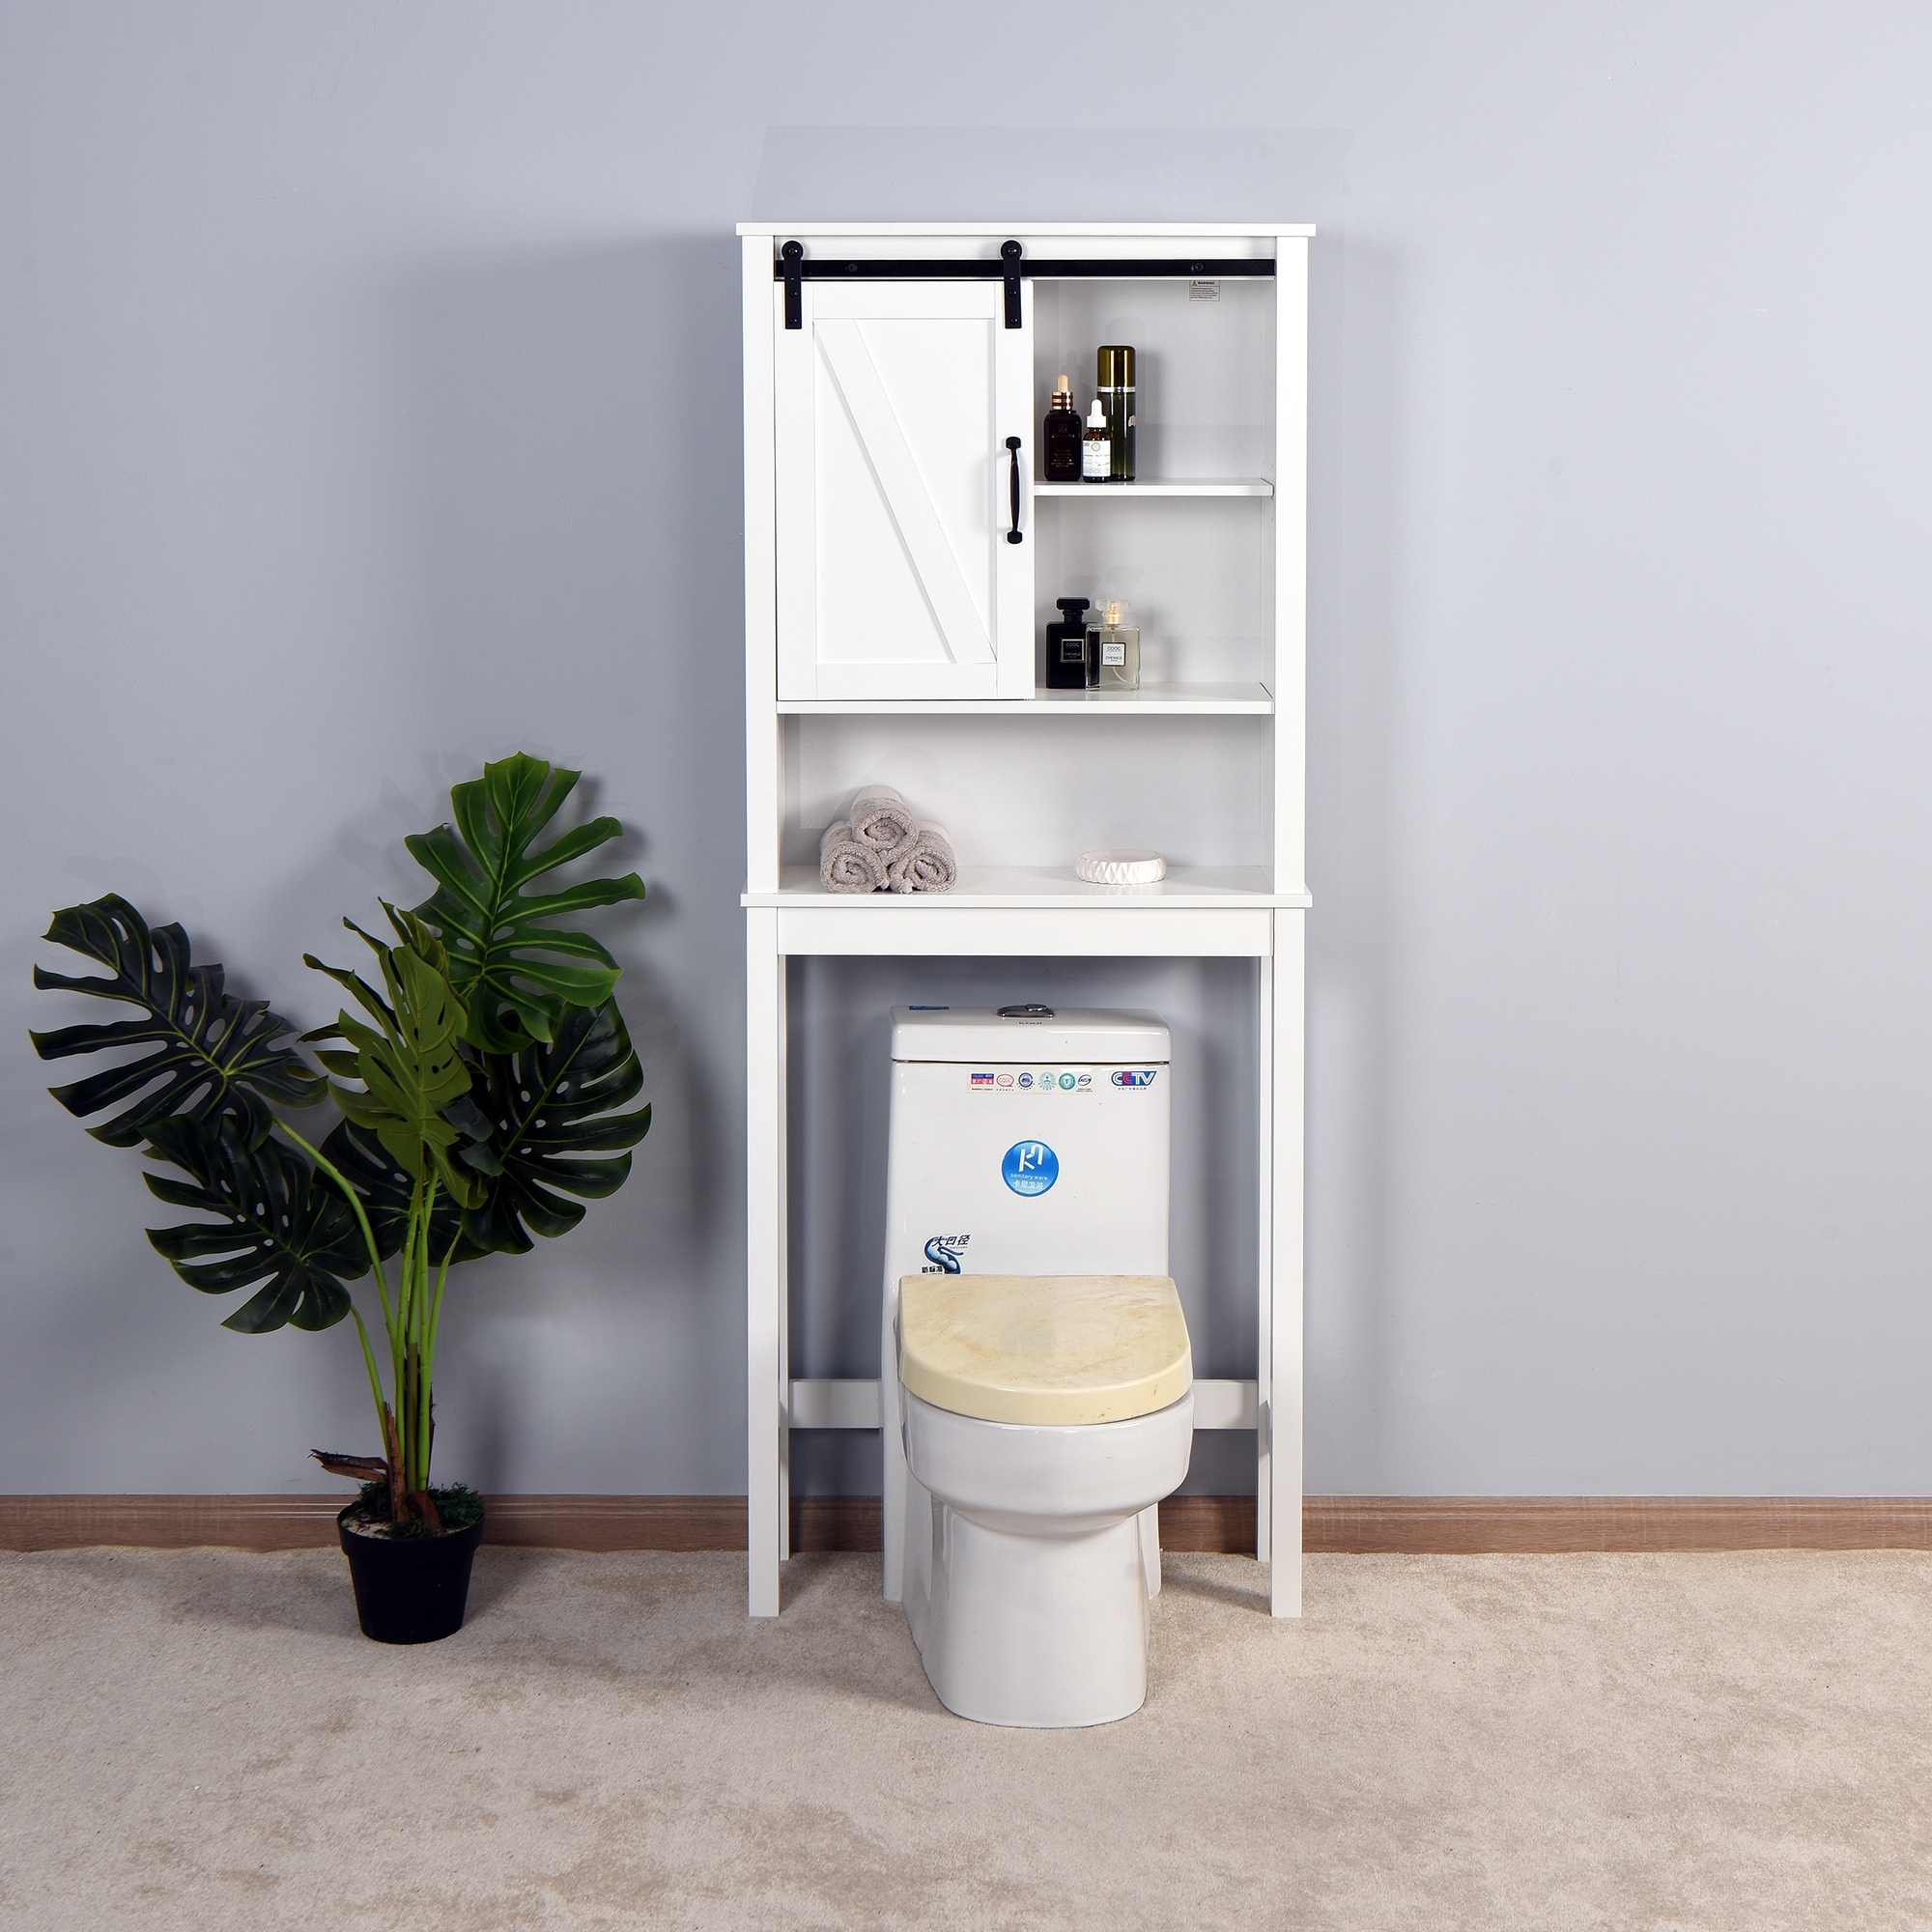 Over the Toilet Bathroom Storage Cabinet with Adjustable Shelf